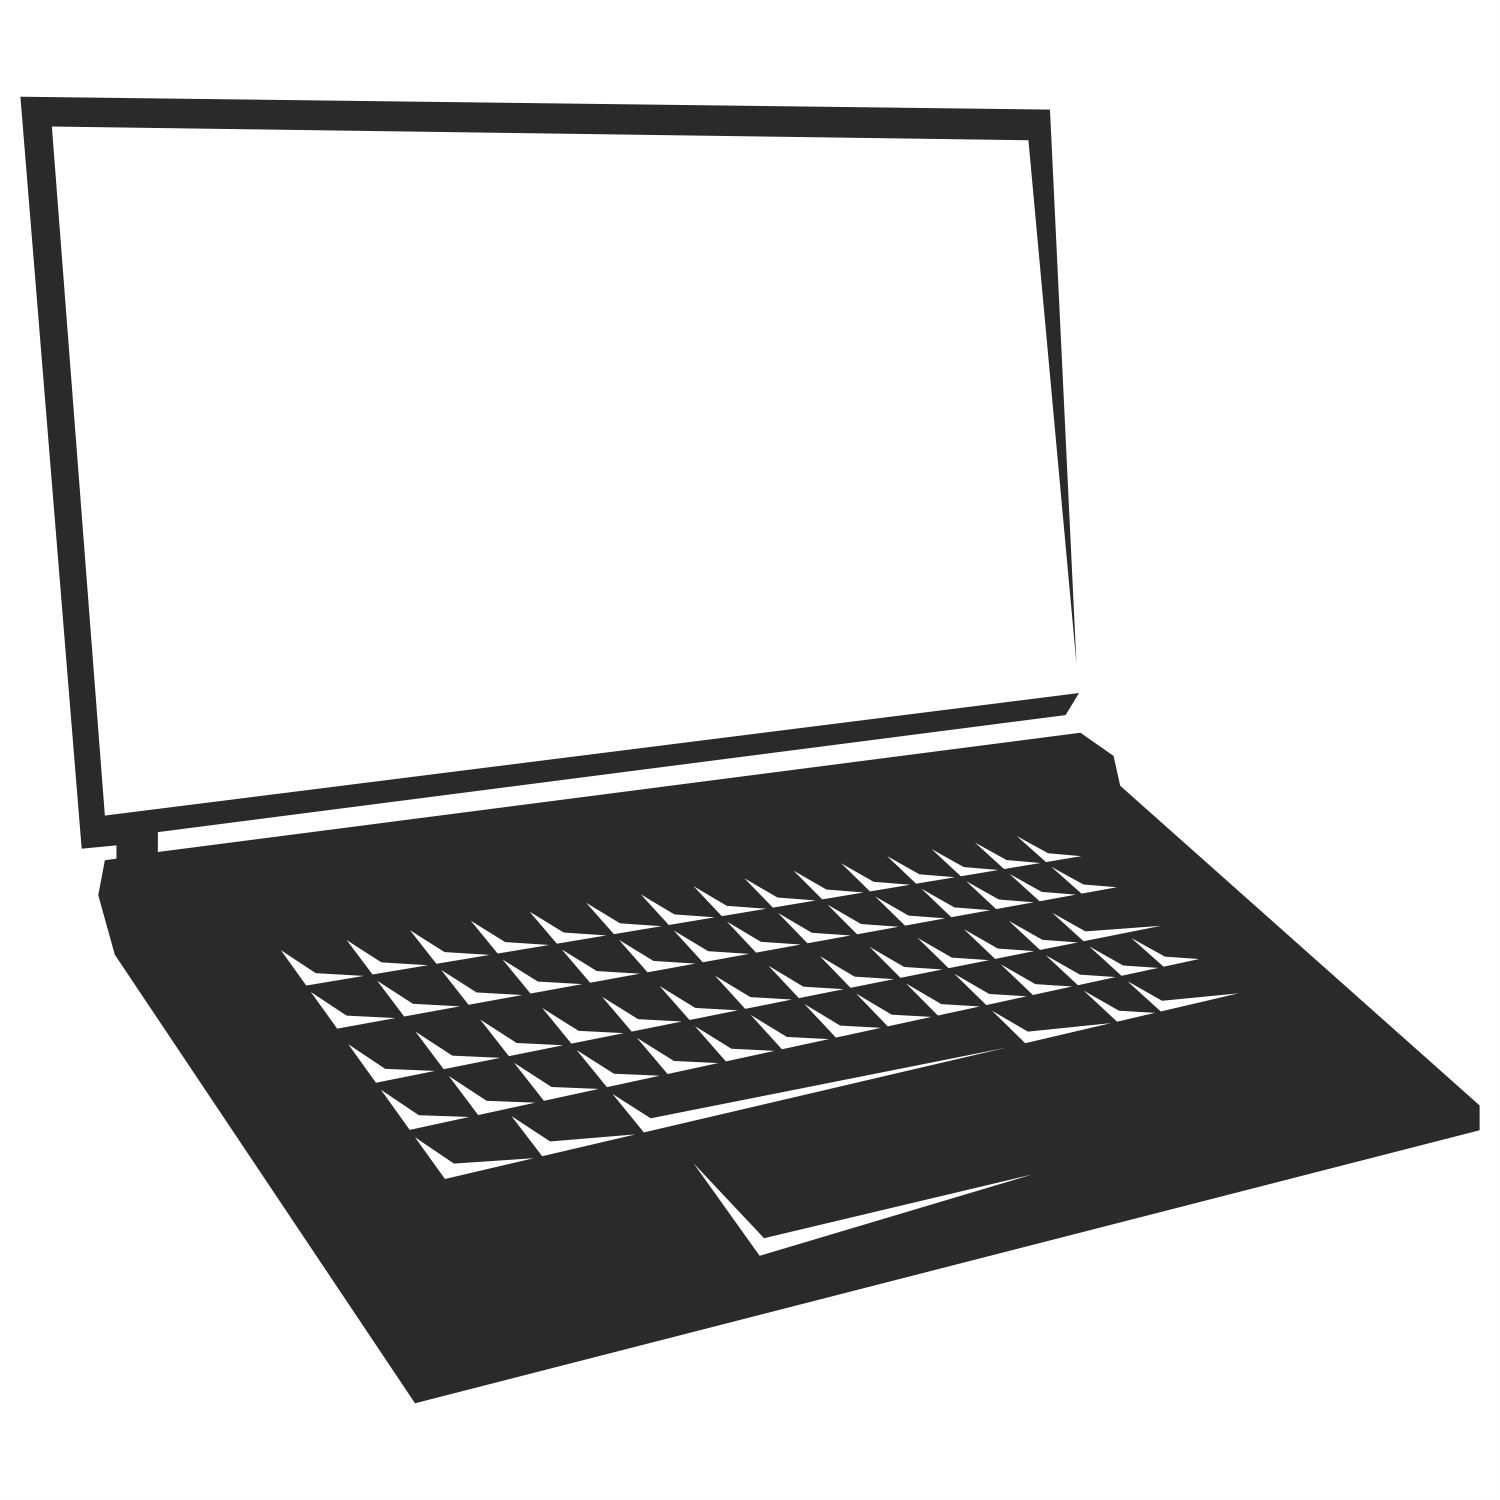 Laptop vector clipart